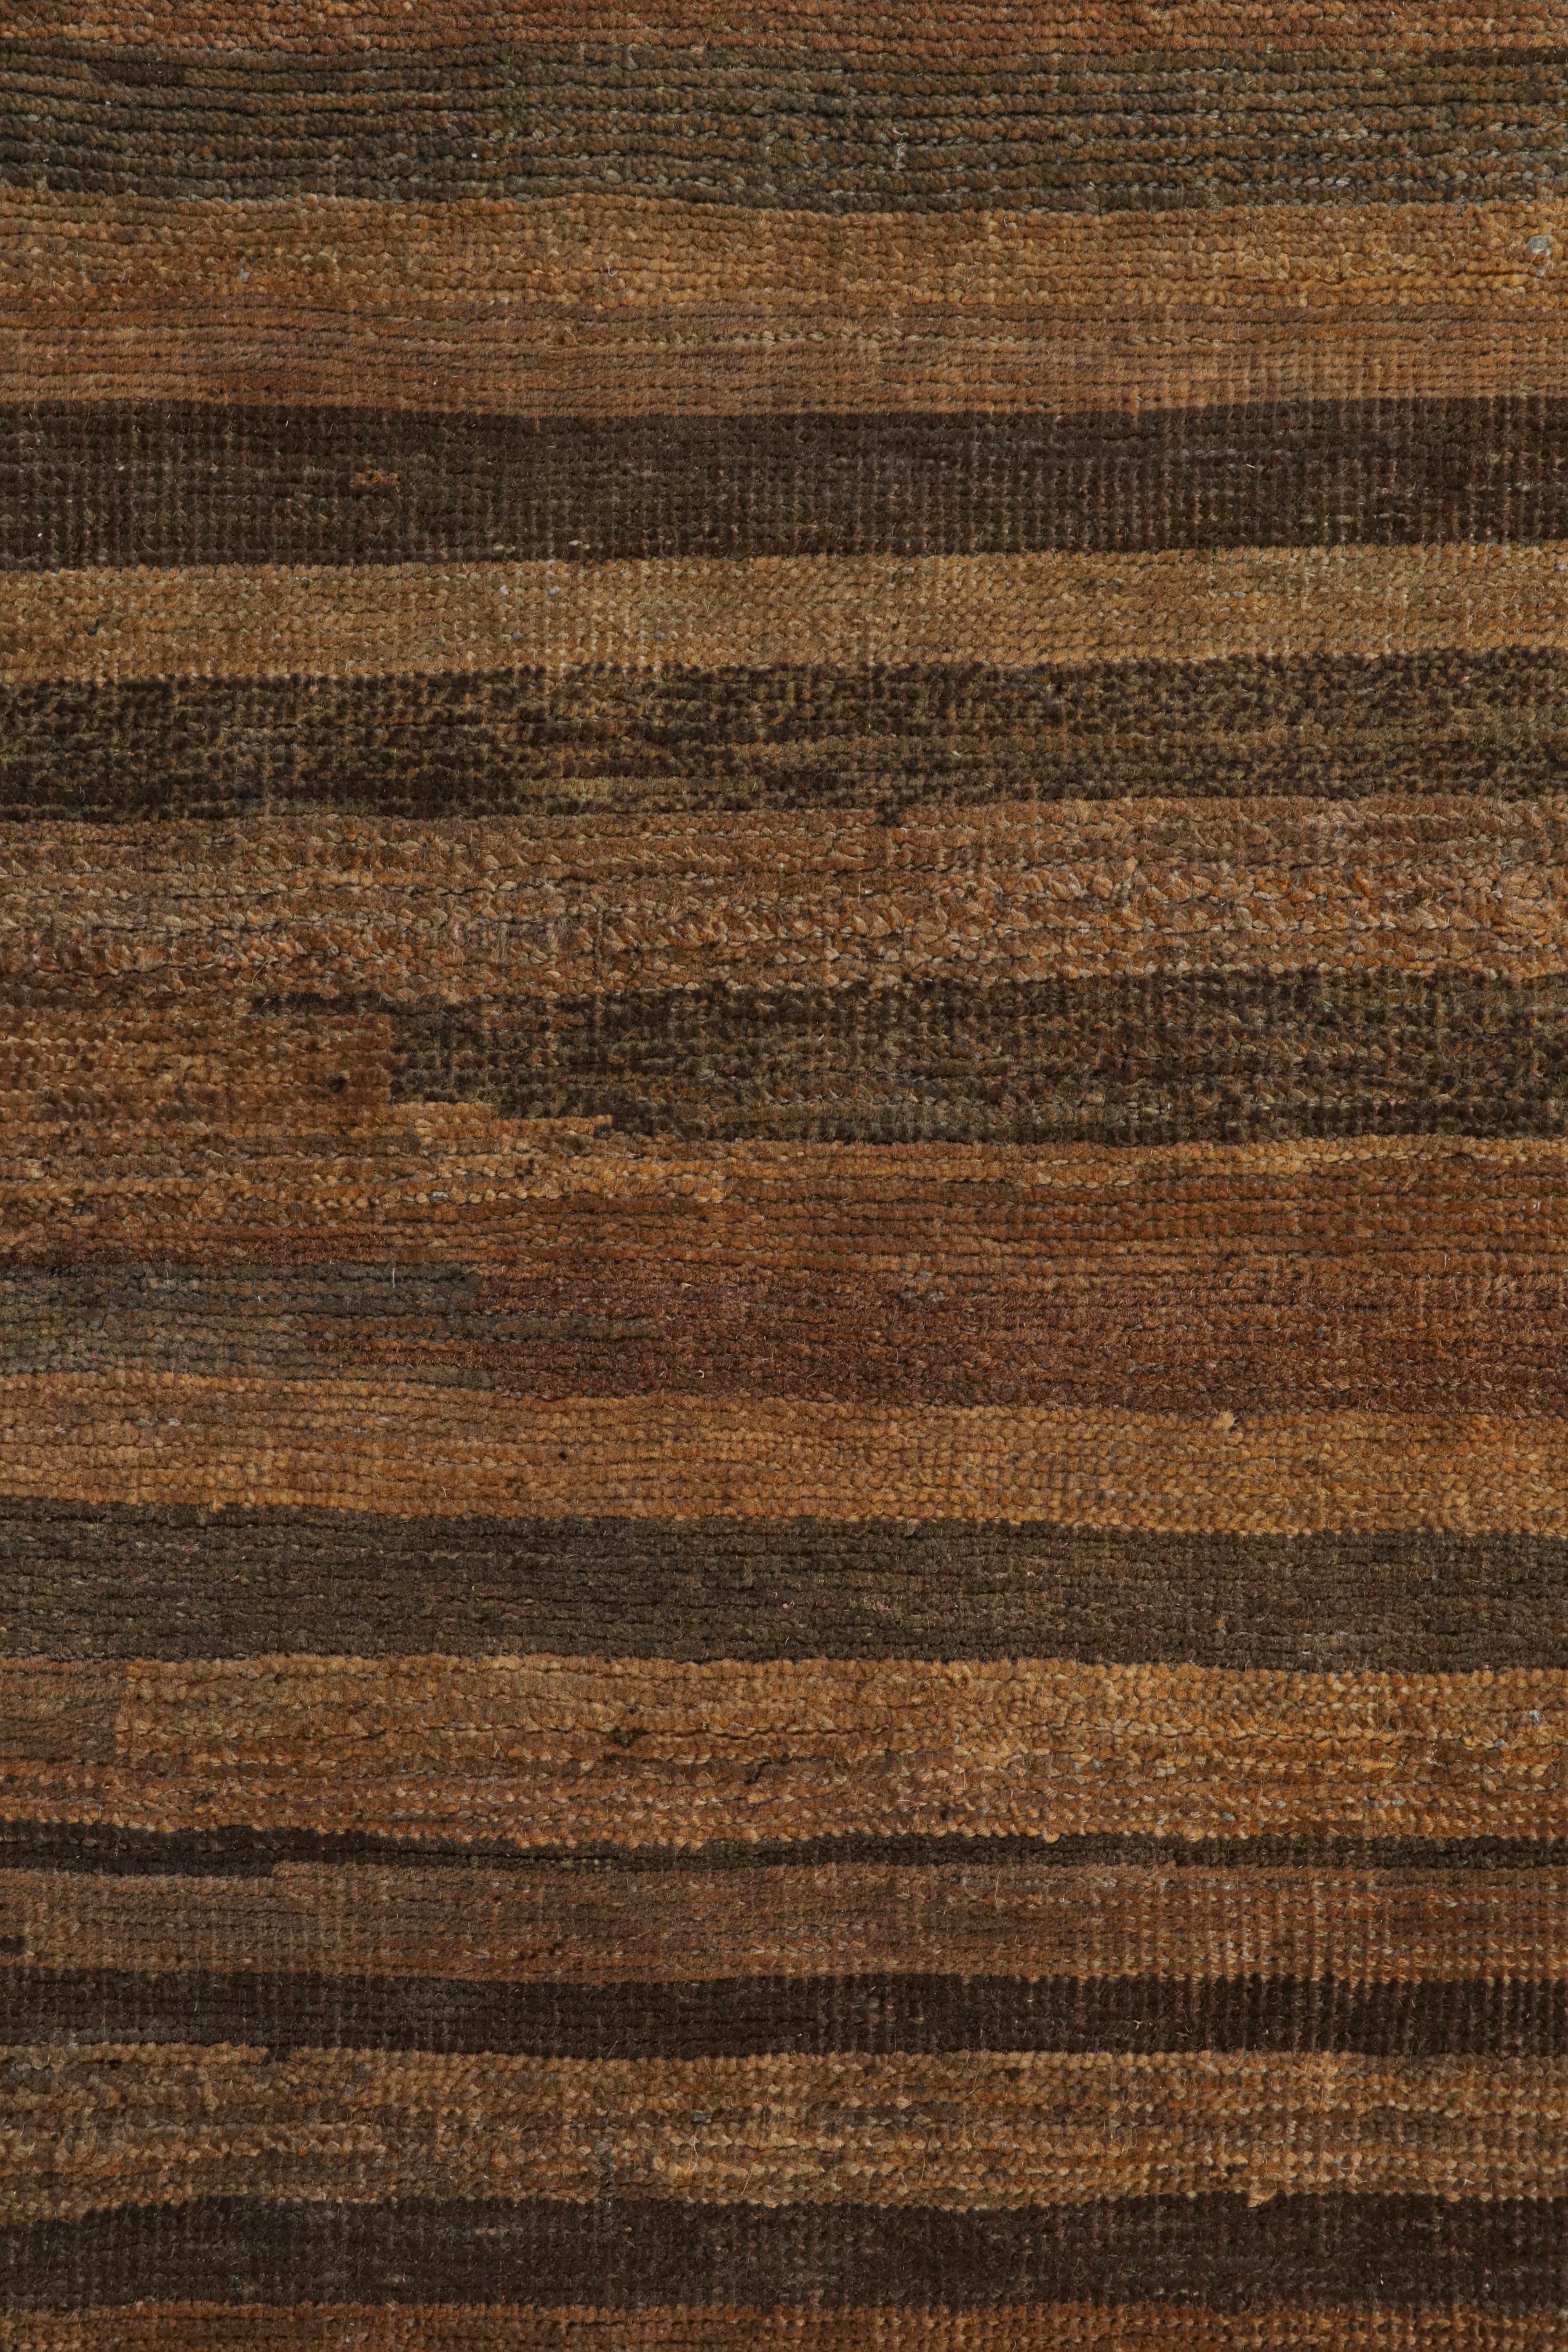 Indien Rug & Kilim's Modern Textural Rug in Beige-Brown and Umber Stripes and Striae (Tapis à rayures beige, marron et orange) en vente